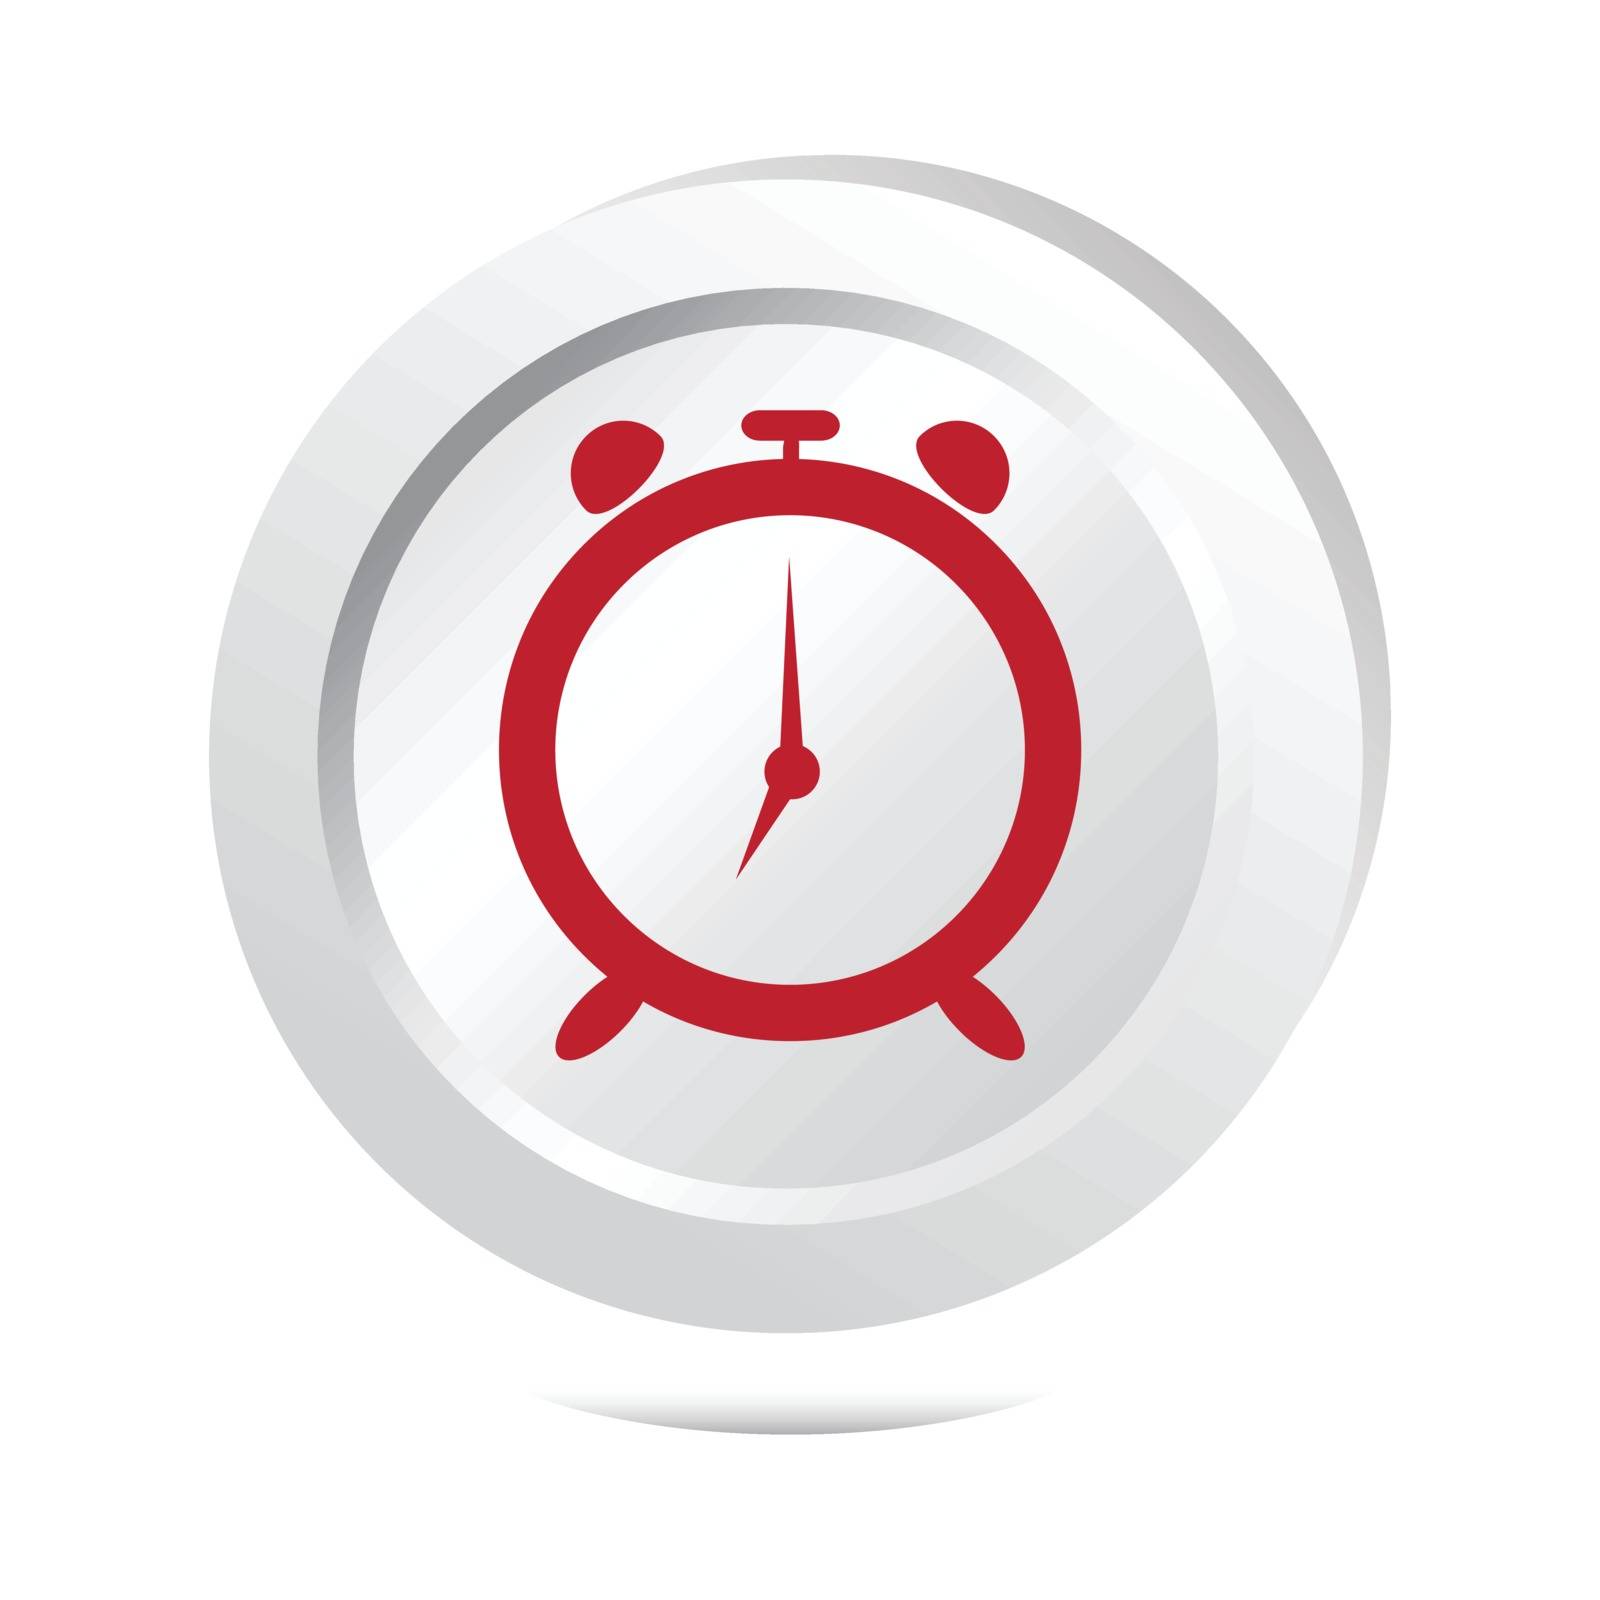 Alarm clock, wake up sign button icon